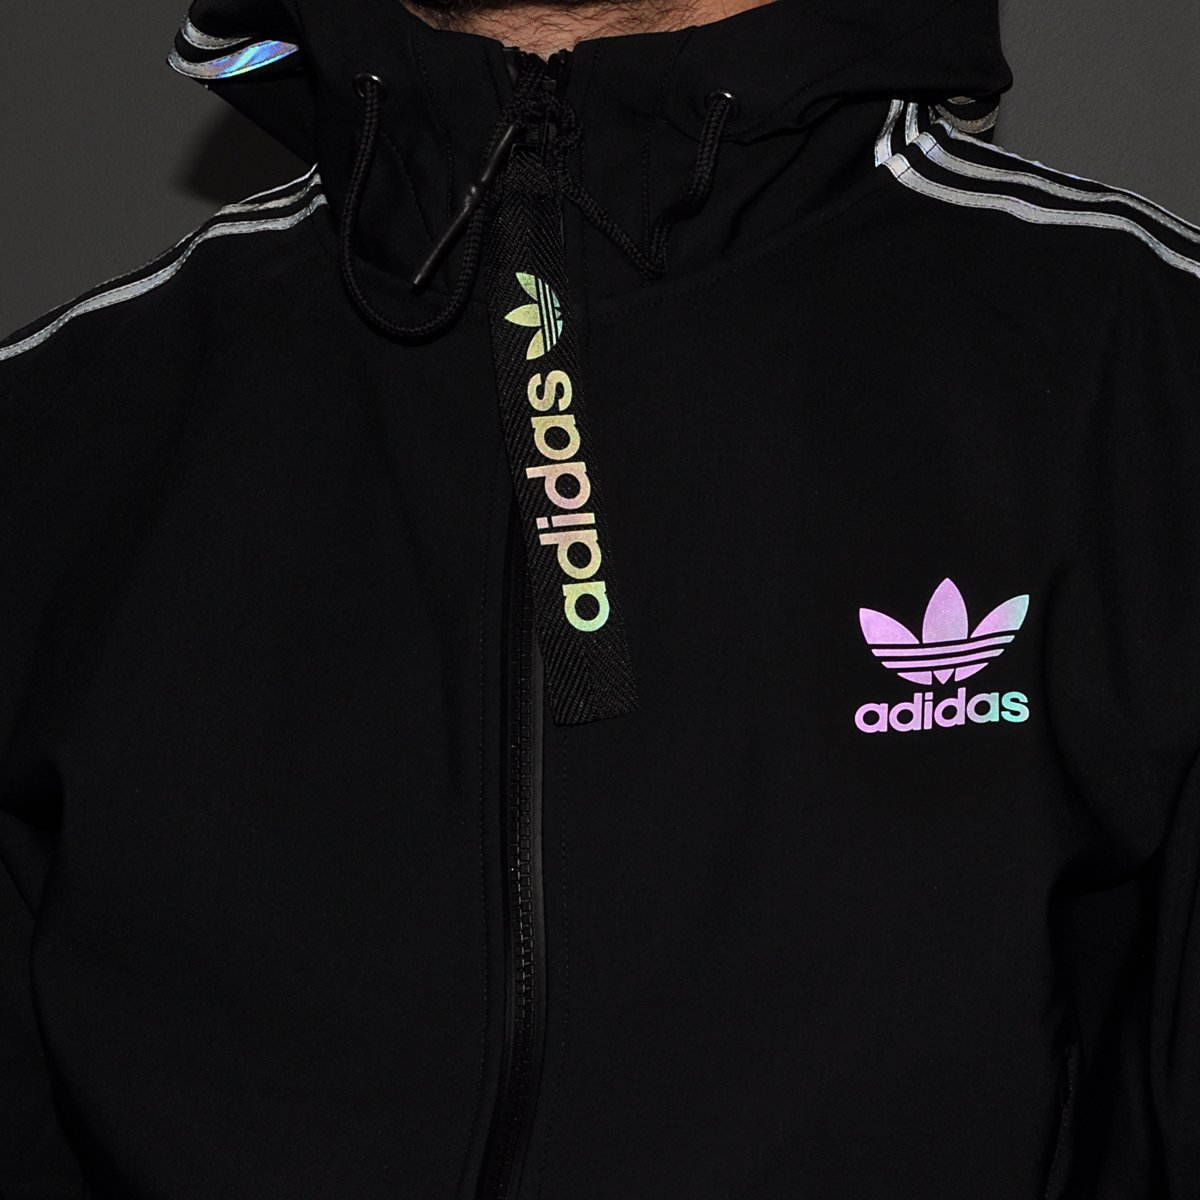 Fietstaxi ramp Eigenlijk Sneaker Shouts™ on Twitter: "The Adidas XENO hoodie is now available via # Adidas Link -&gt; https://t.co/Kfh94Fmj35 https://t.co/Si2xlm8npT" / Twitter